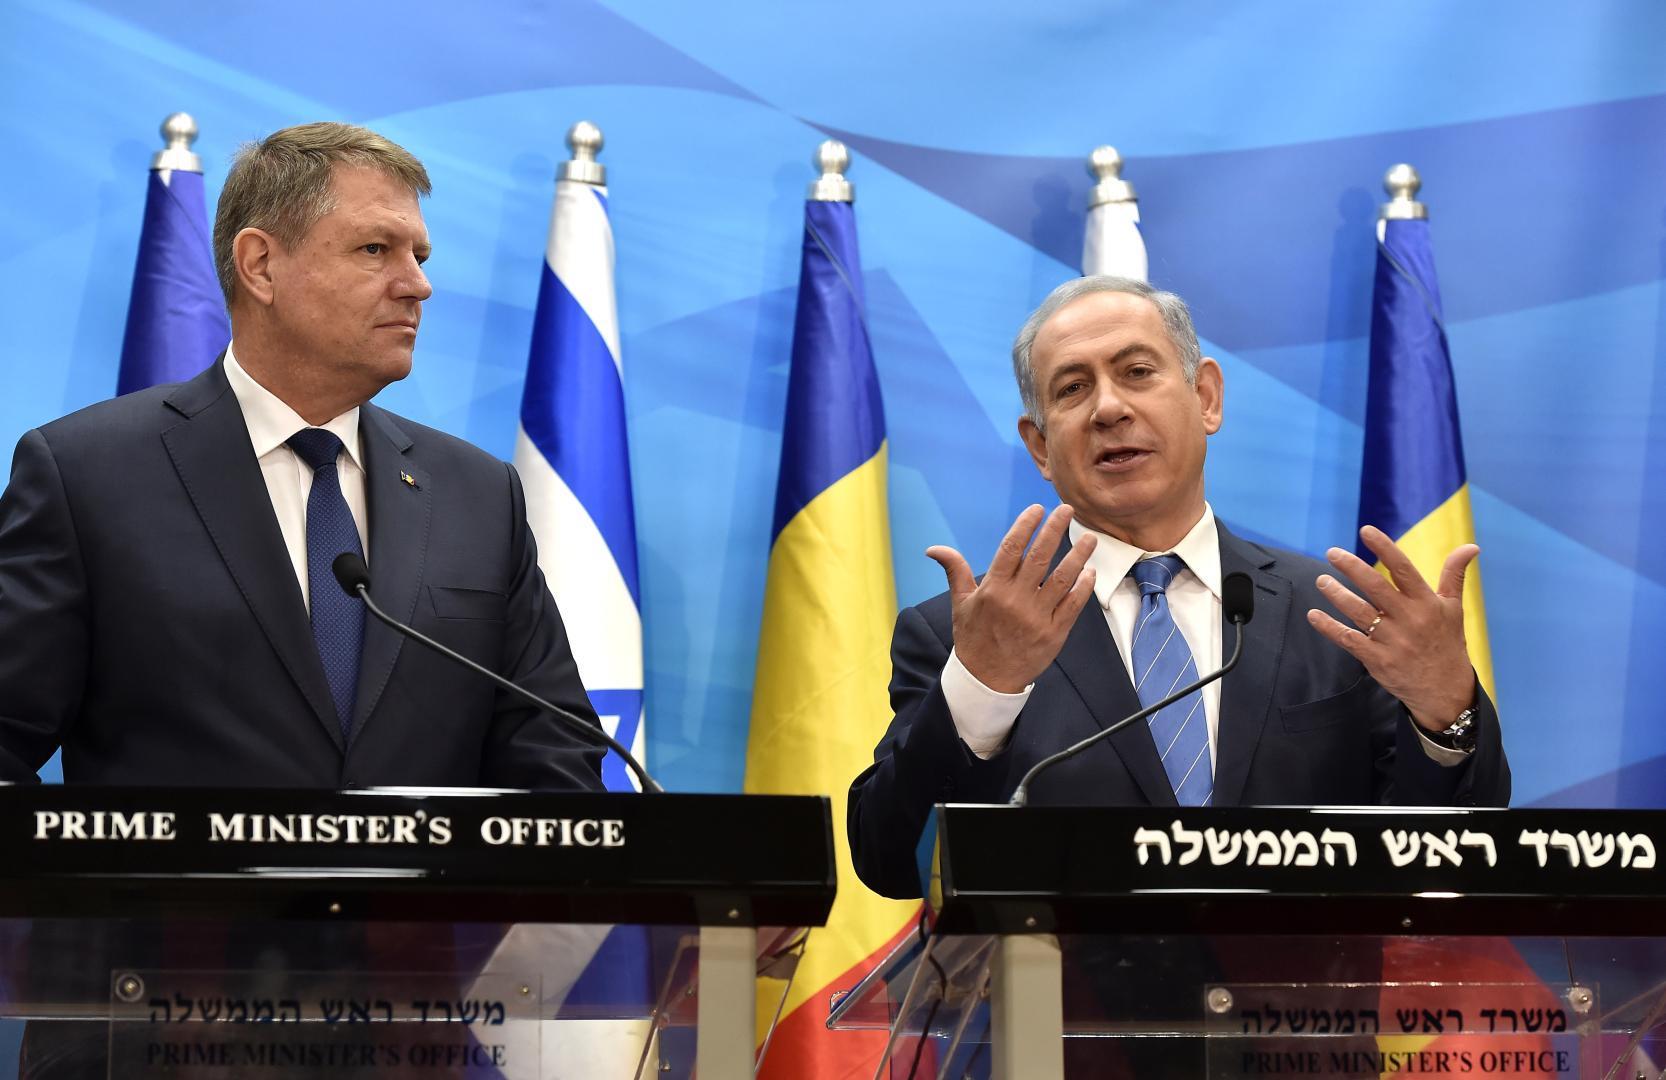 Președintele român Klaus Iohannis refuză momentan mutarea ambasadei statului român la Ierusalim